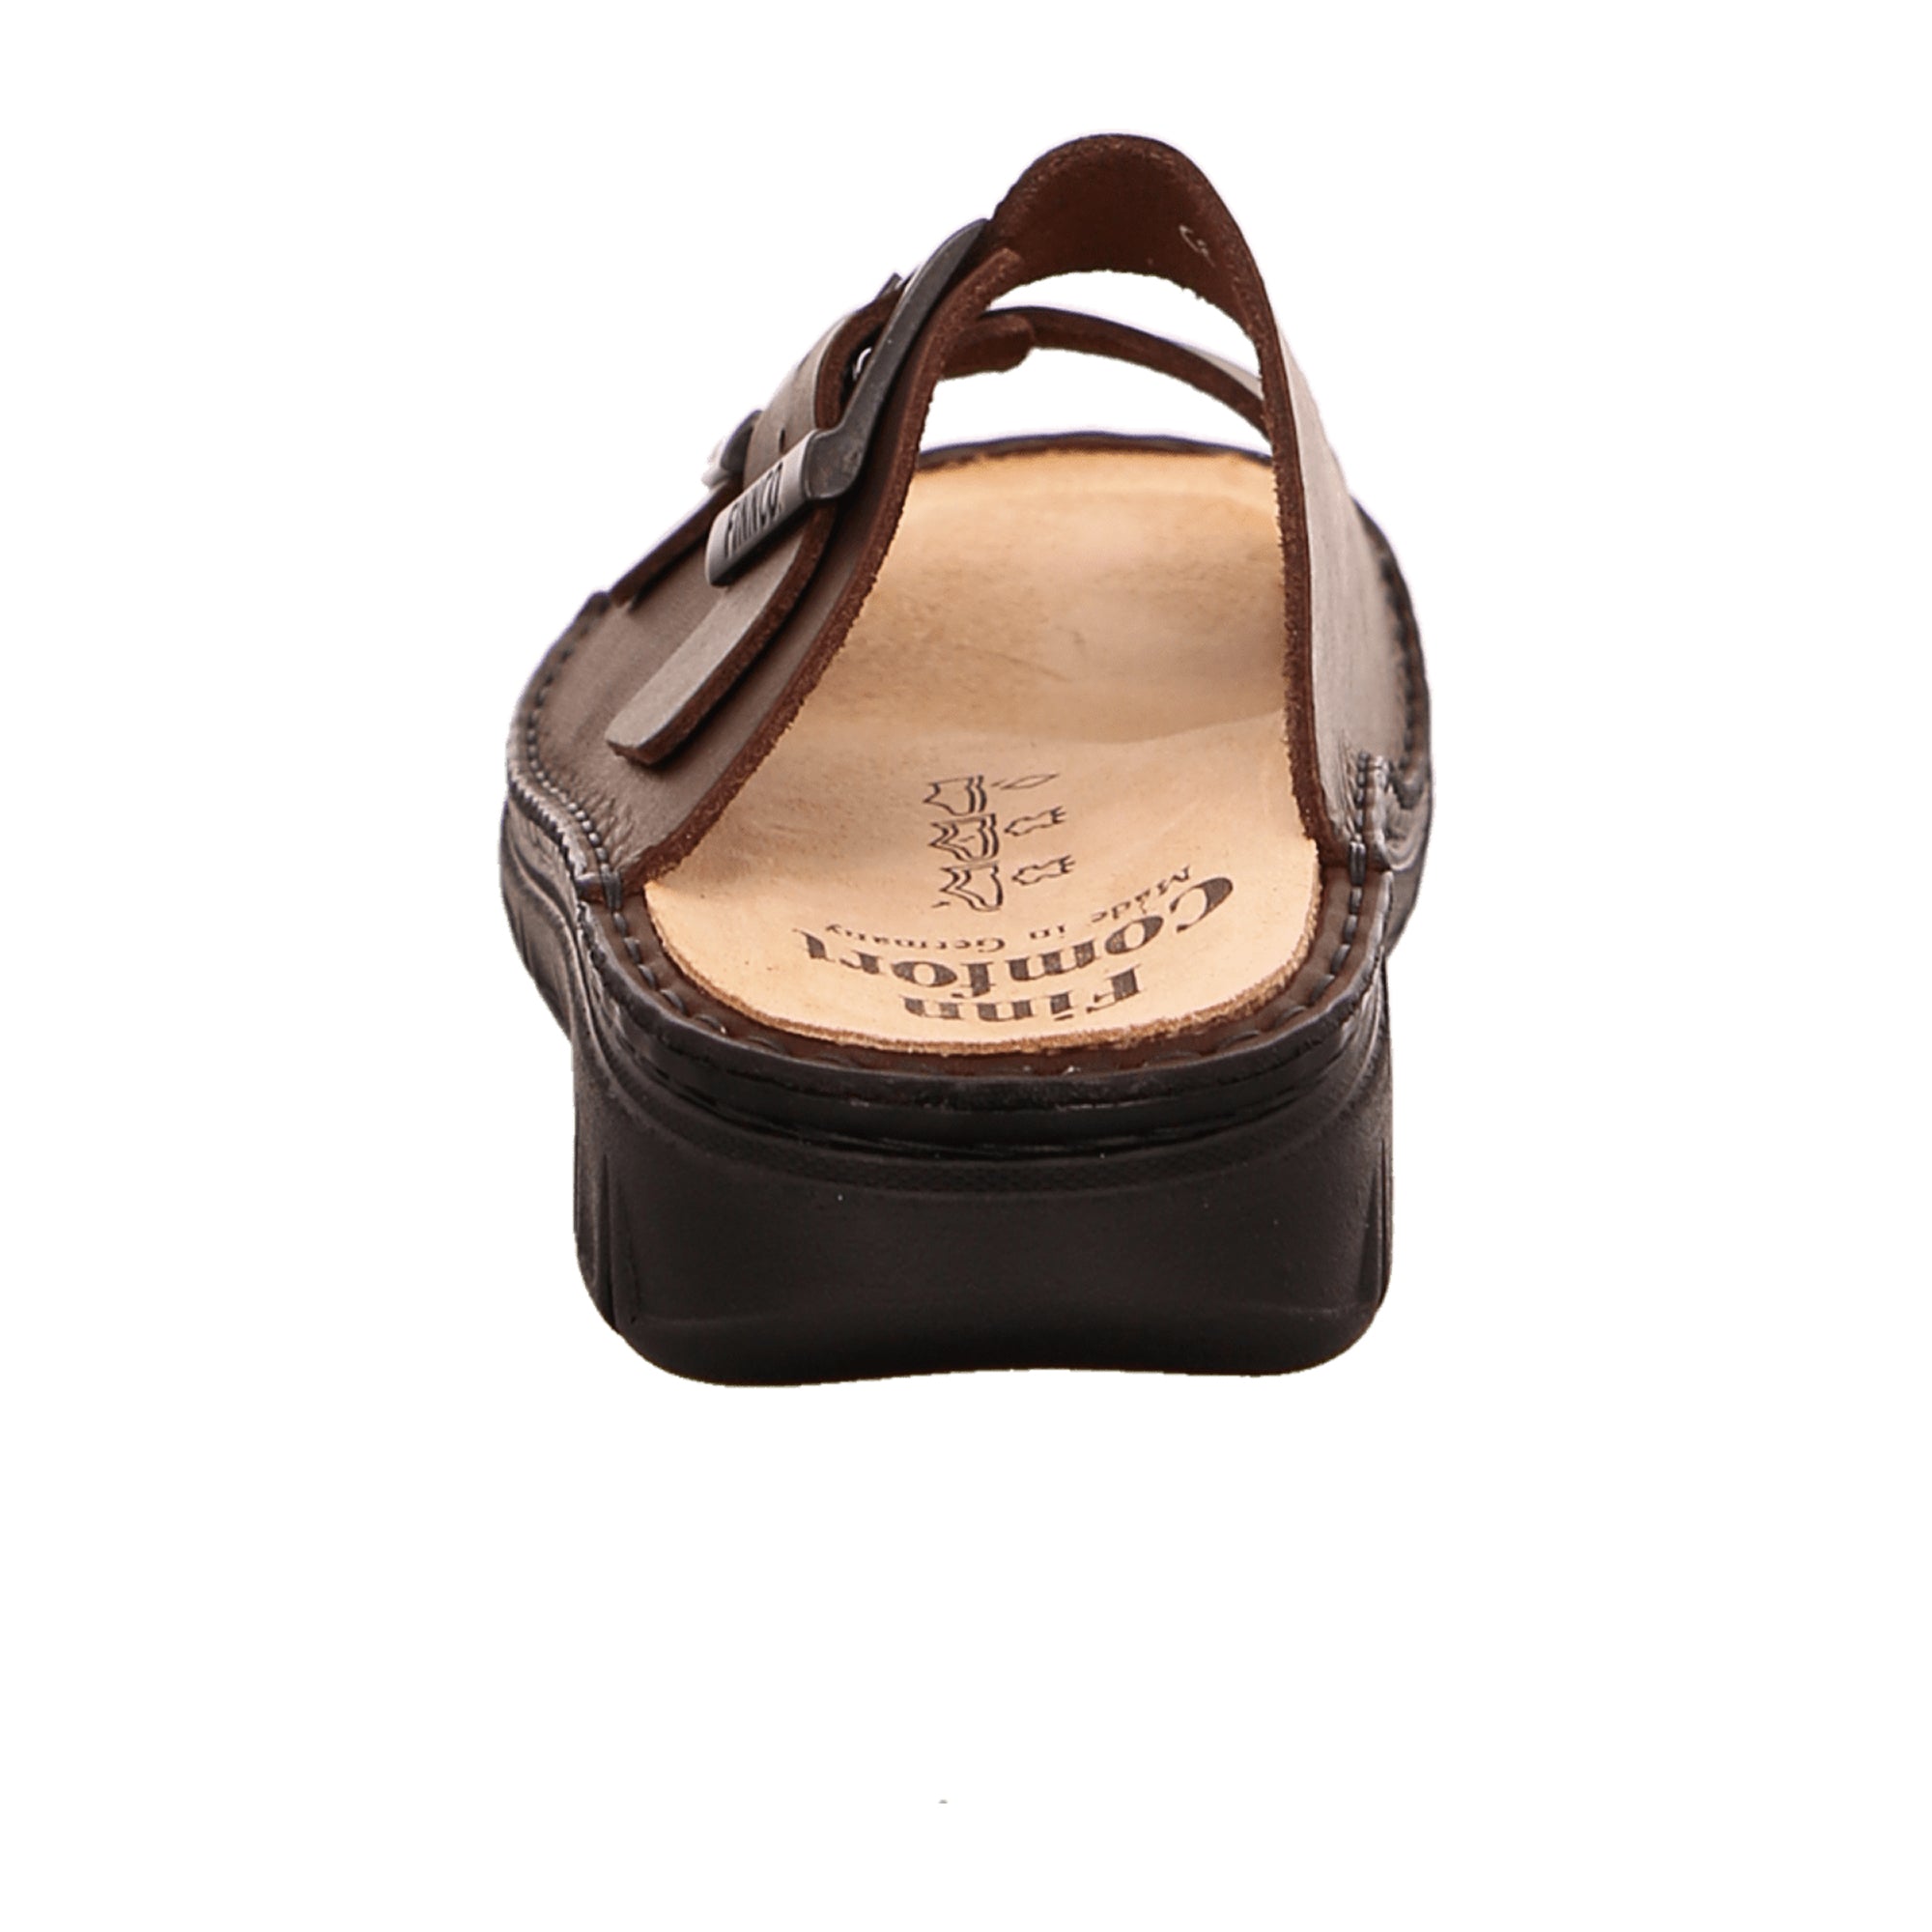 Finn Comfort Cayman-S Men's Sandals - Stylish & Durable Brown Leather